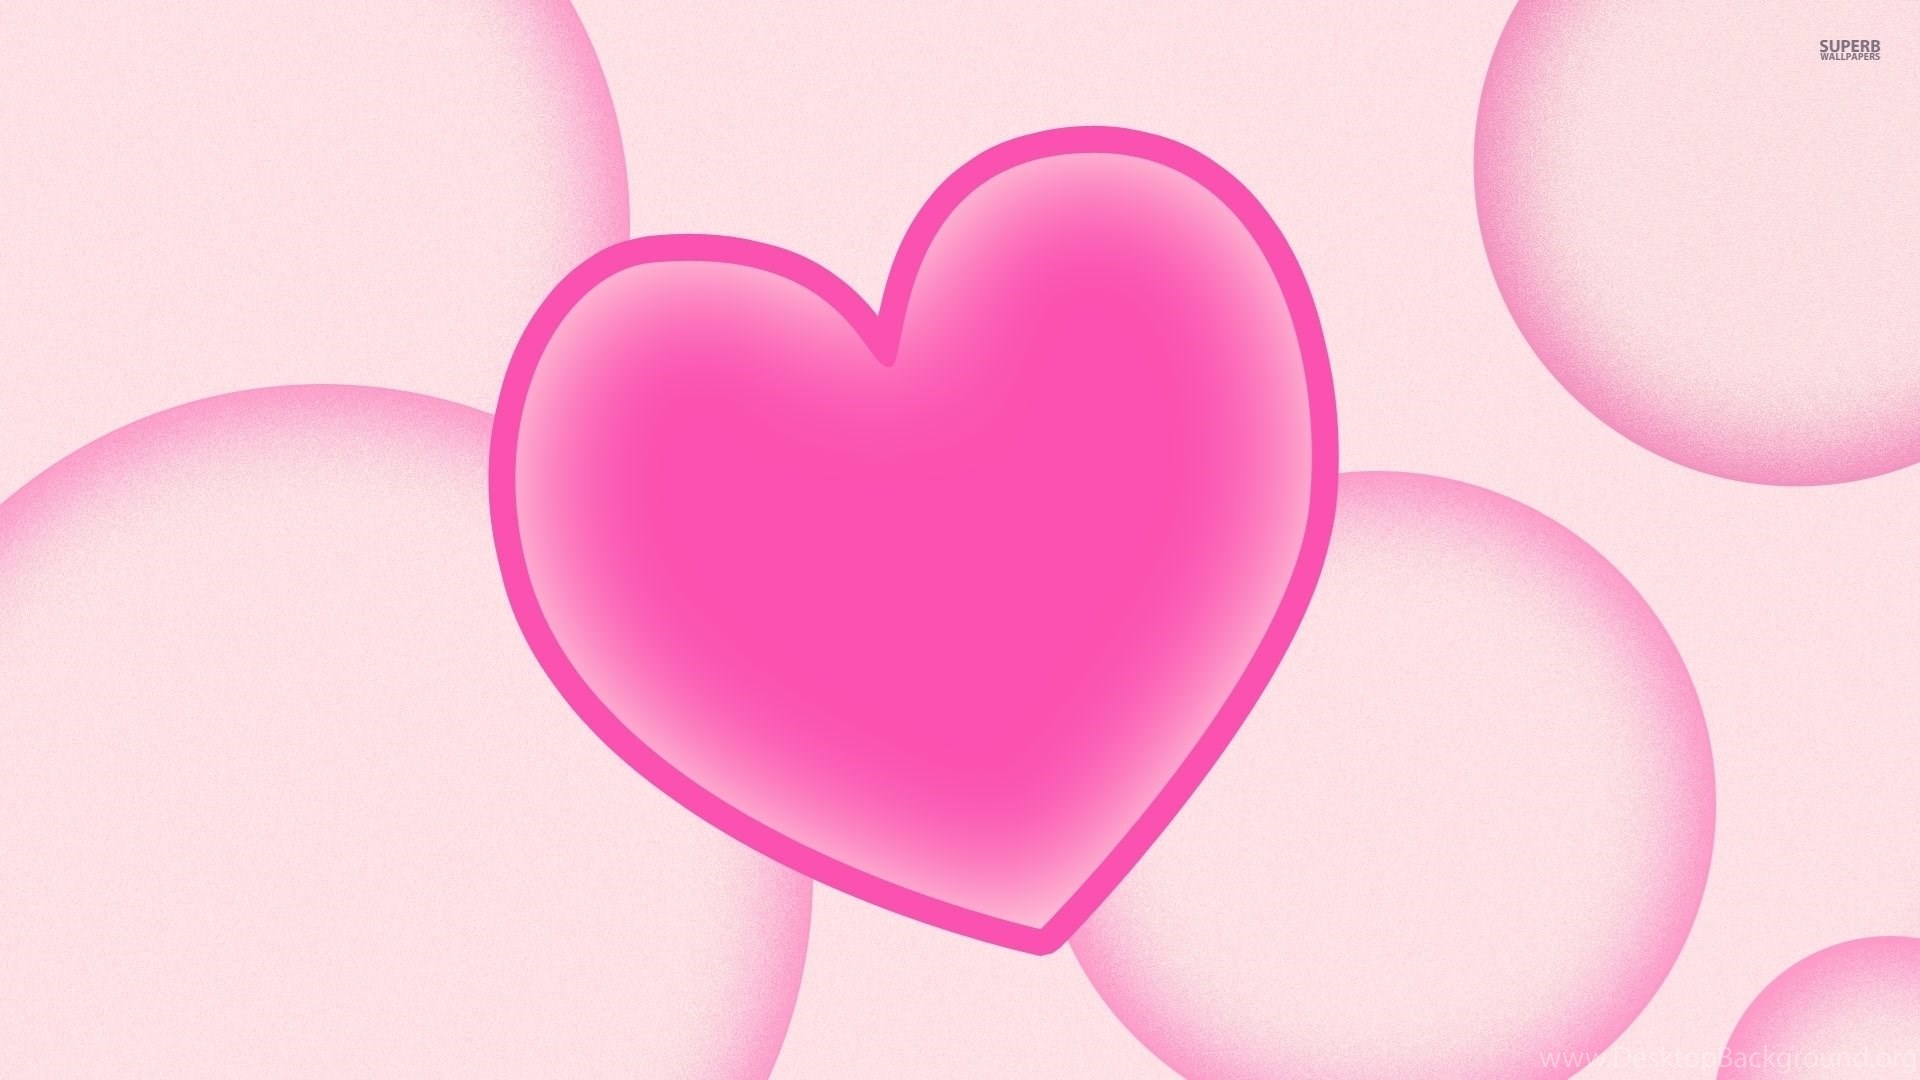 Pink Bubbles By The Pink Heart Wallpaper Digital Art Wallpaper. Desktop Background